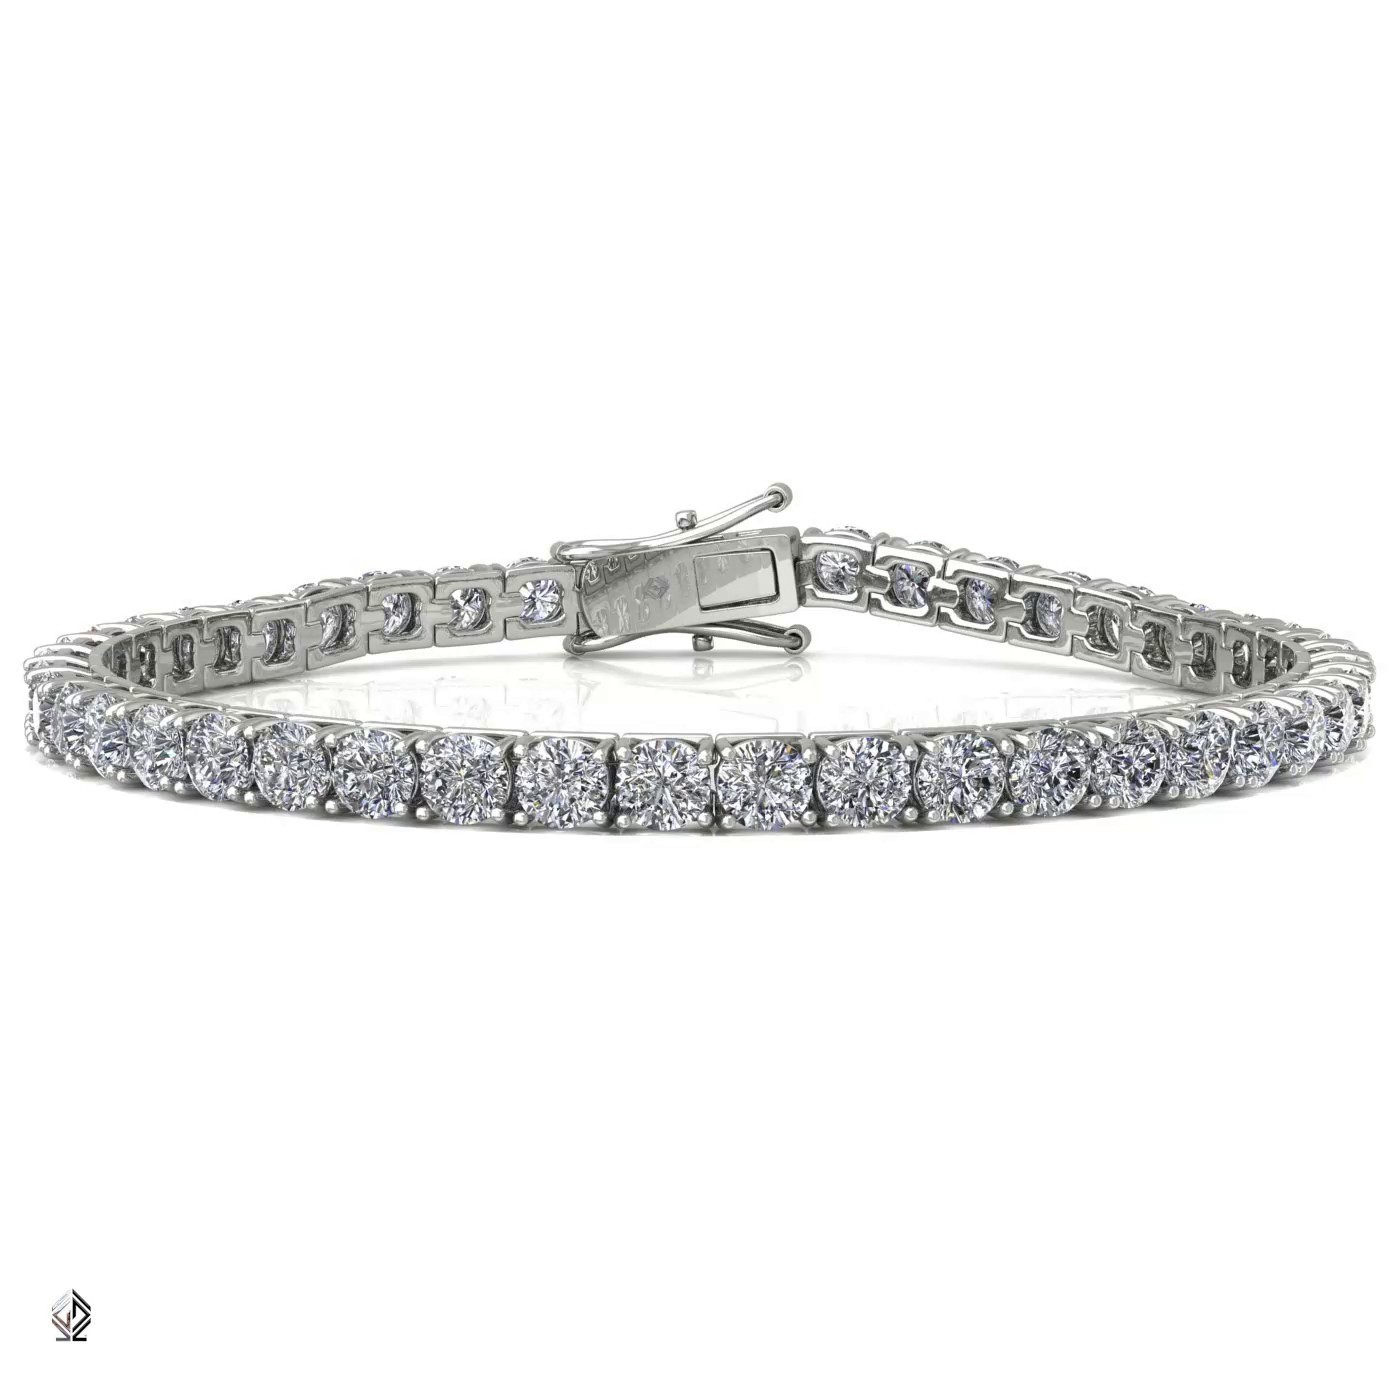 18k white gold 2.8mm 4 prong round shape diamond tennis bracelet in square setting Photos & images